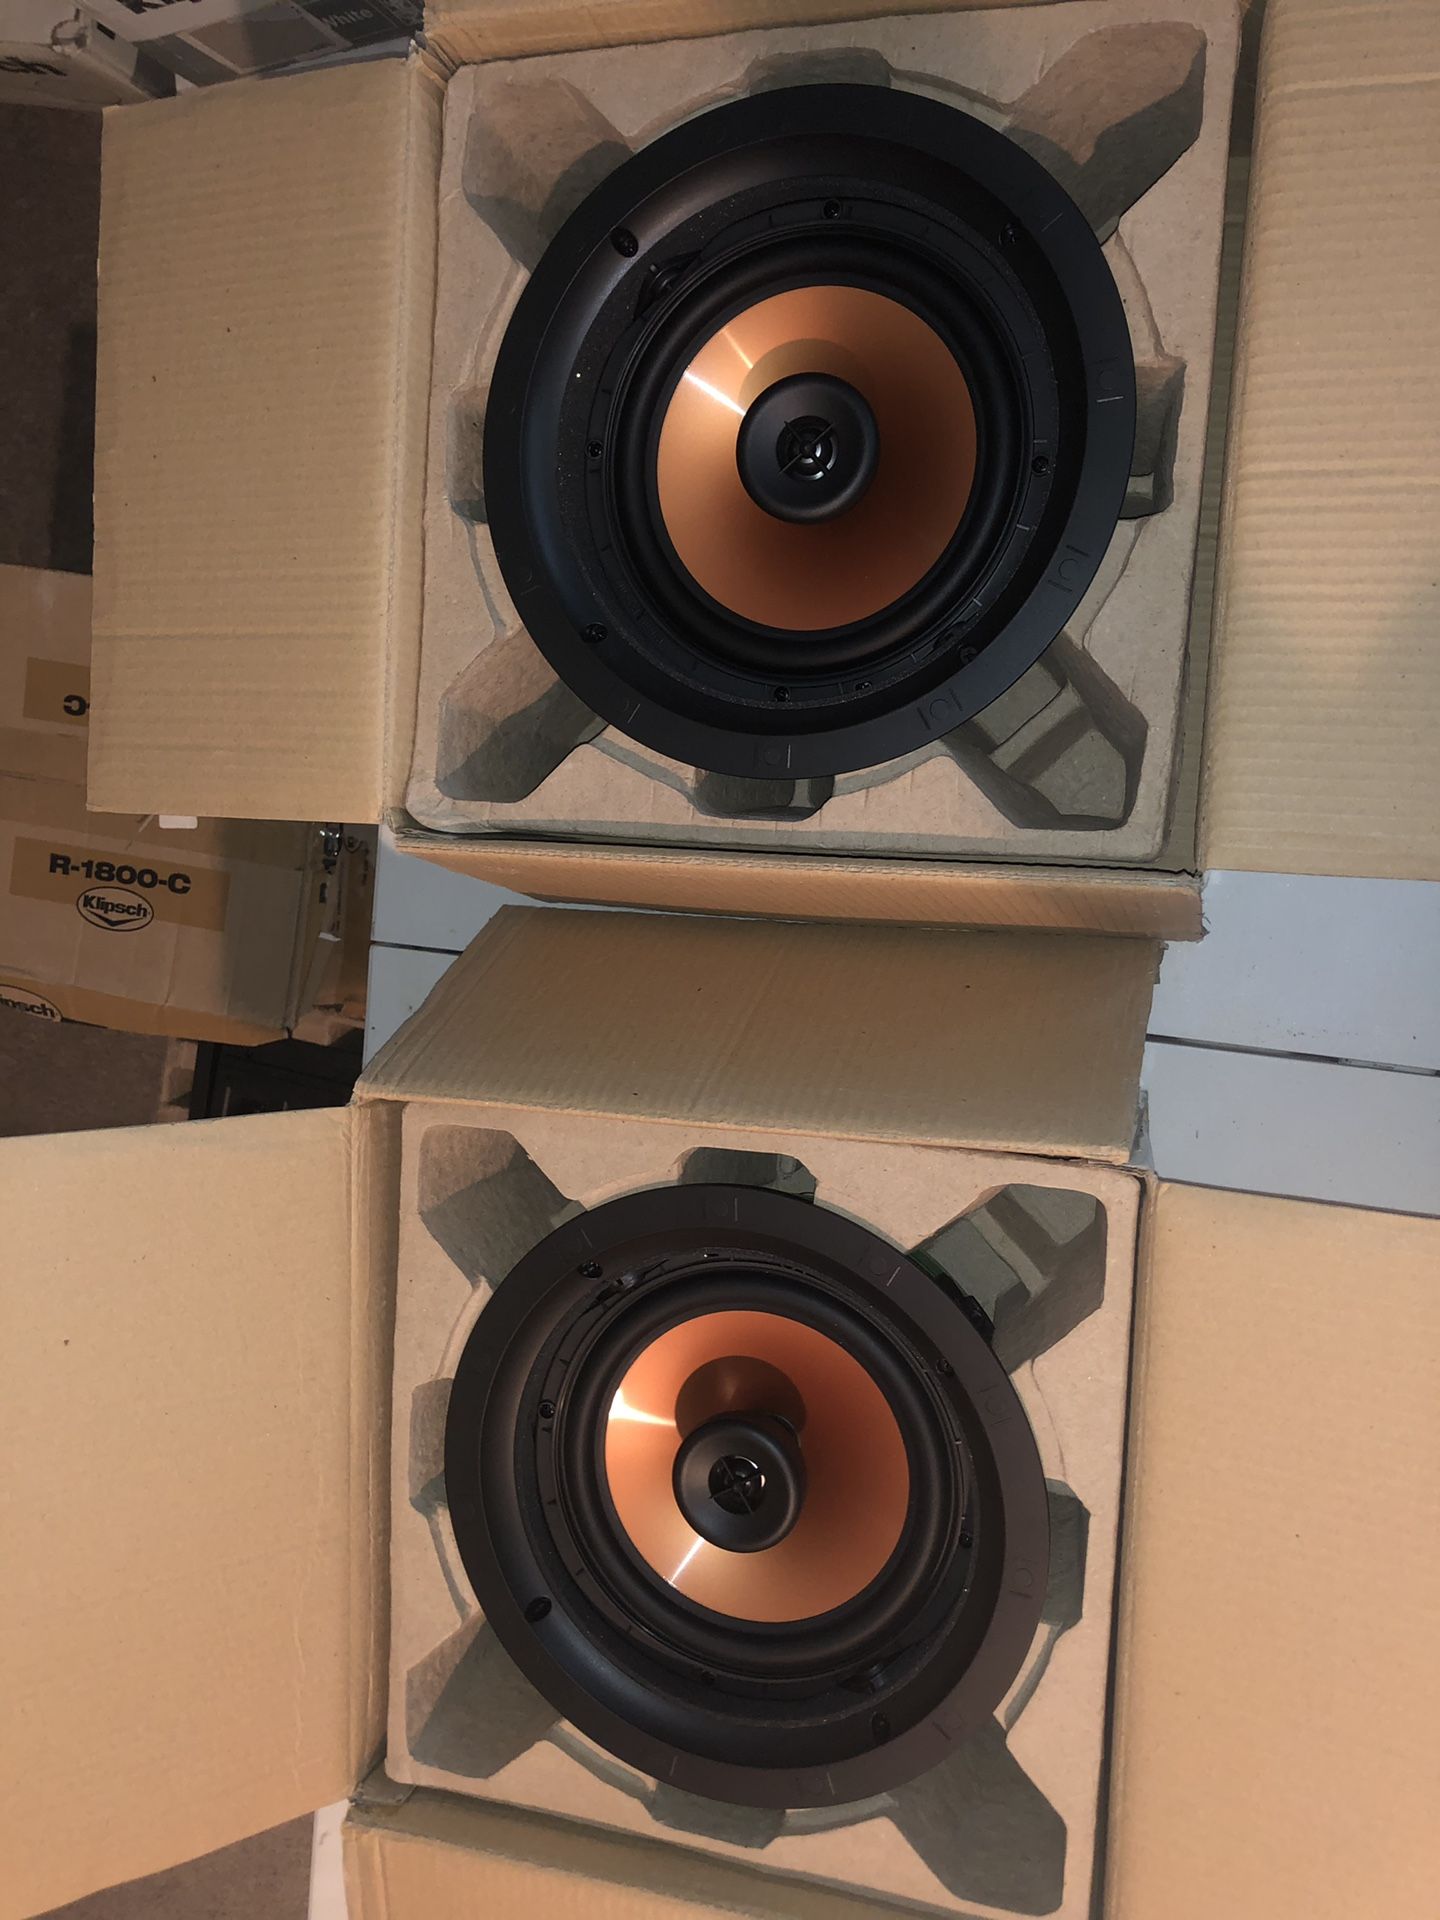 2 Klipsch CDT-3800-C II in ceiling speakers